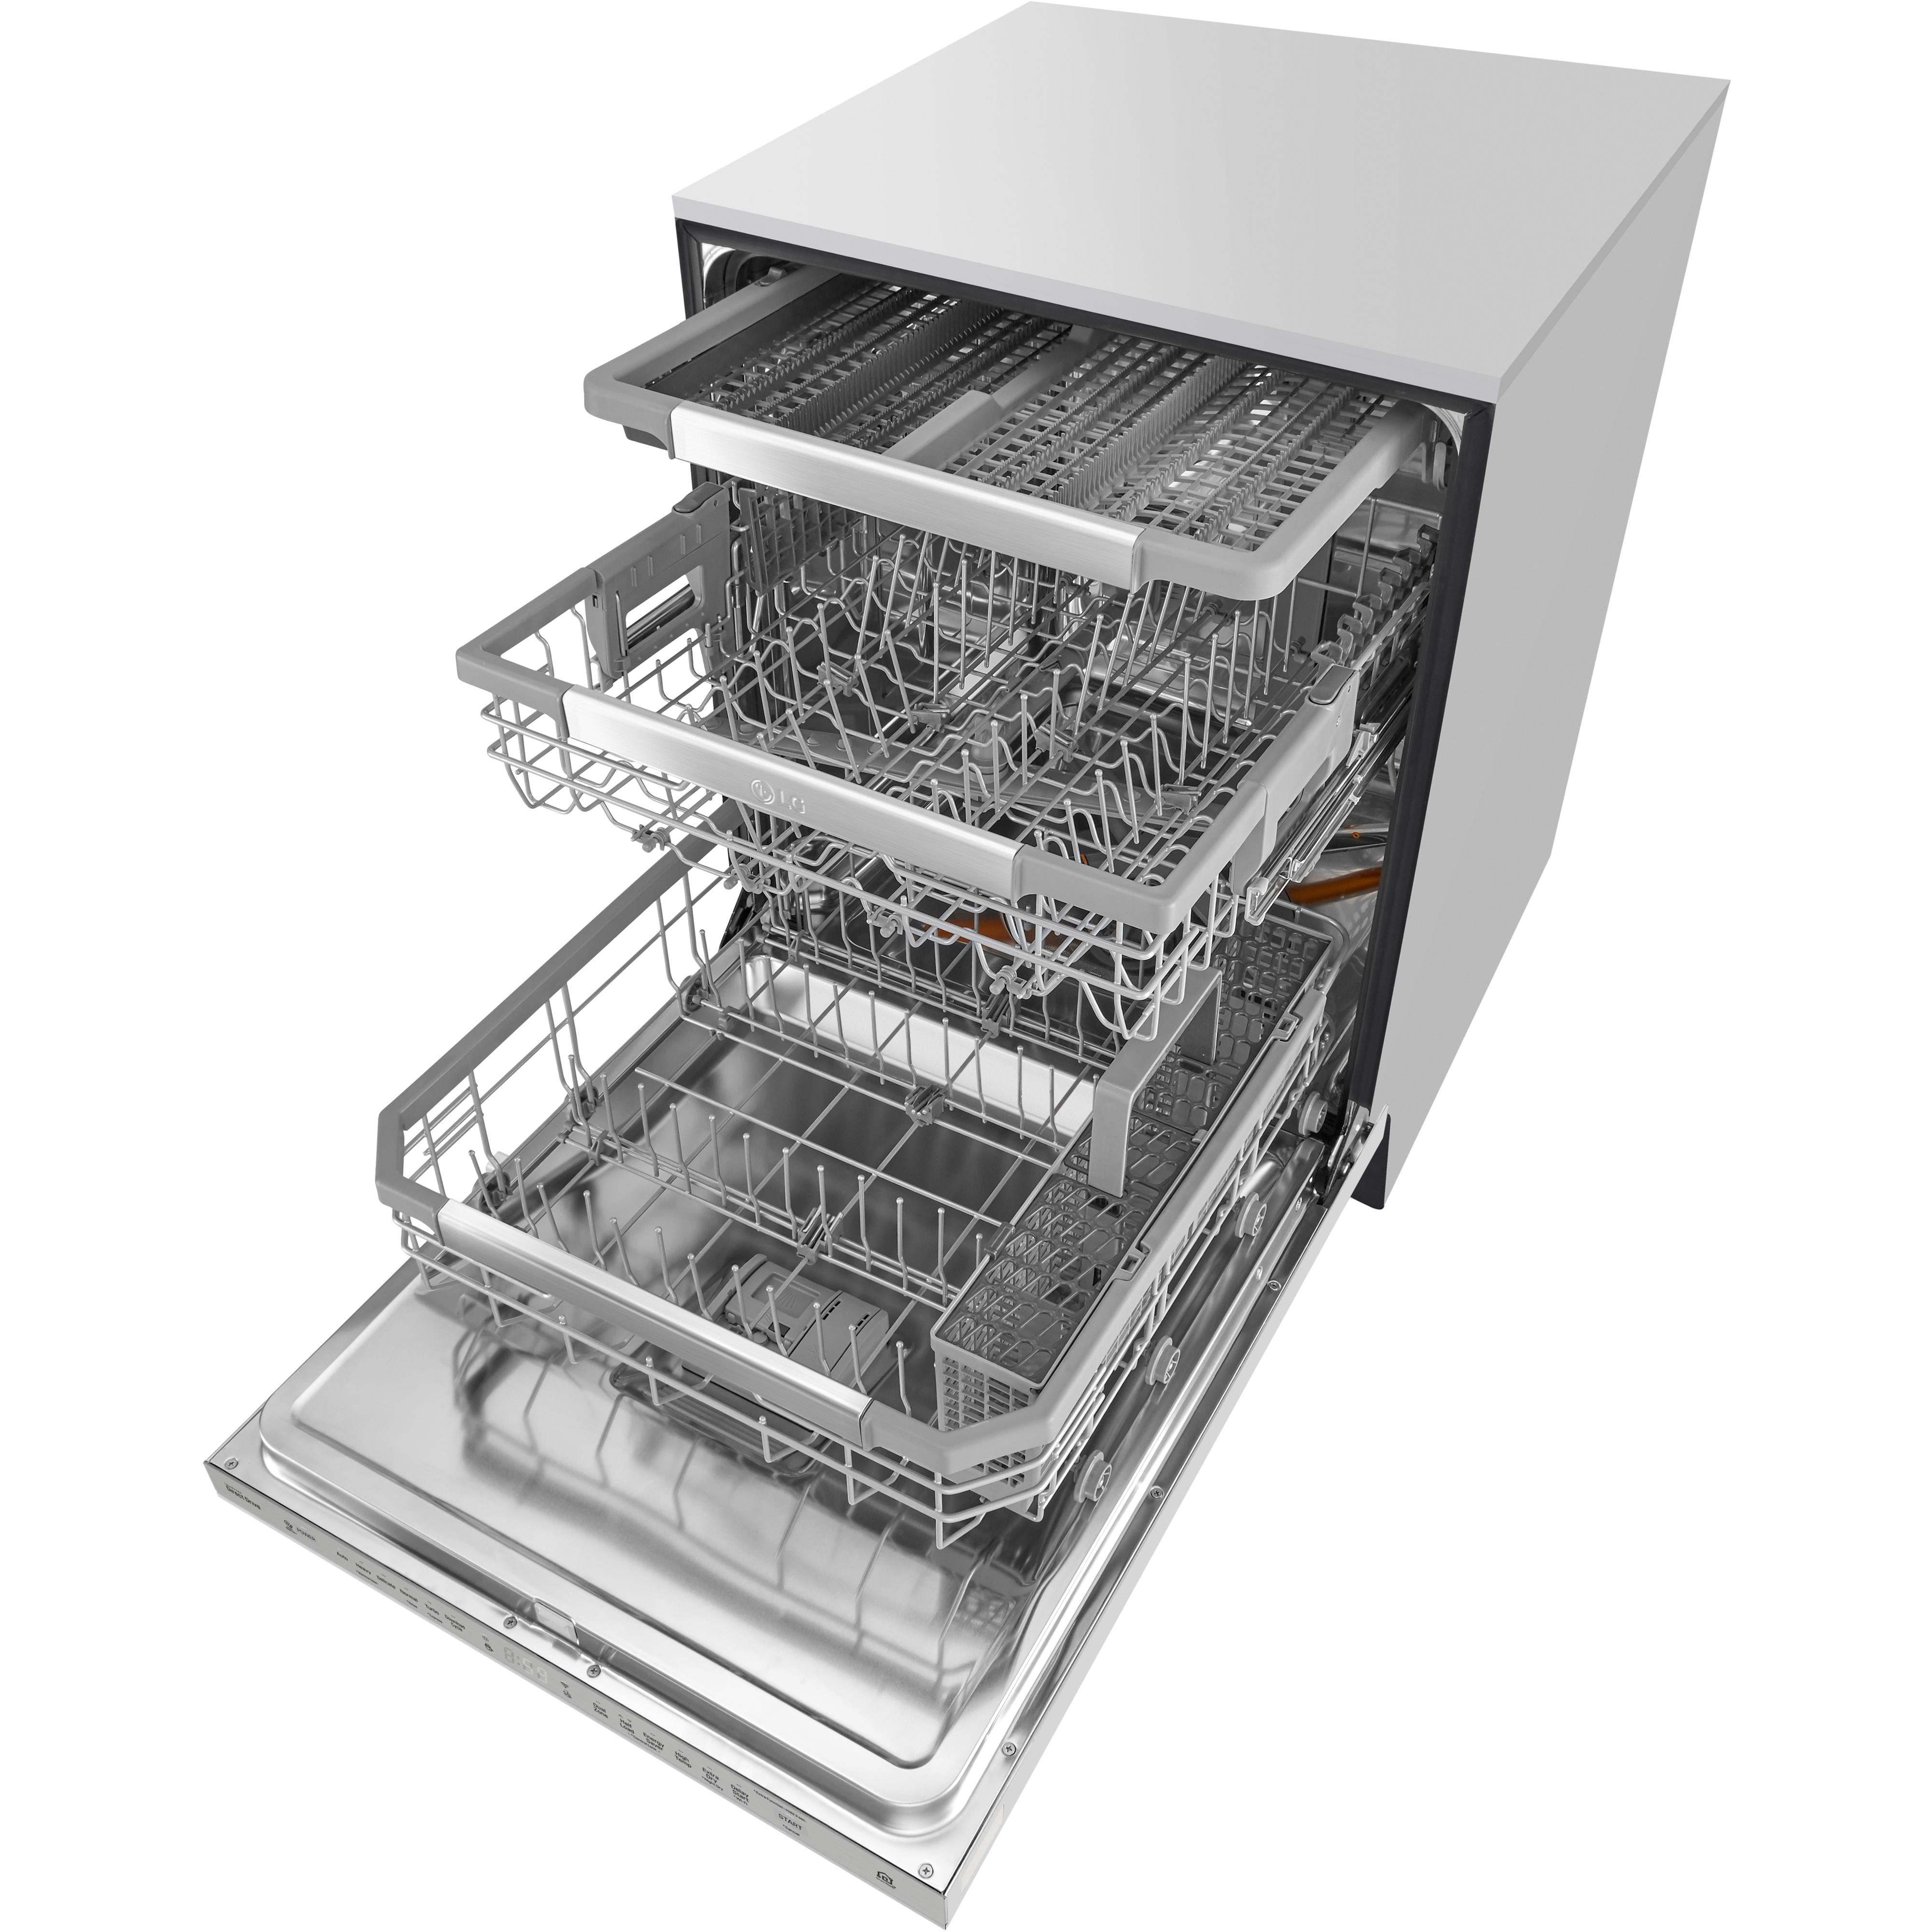 LG 24-inch Built-in Dishwasher with QuadWash? LDT7797ST